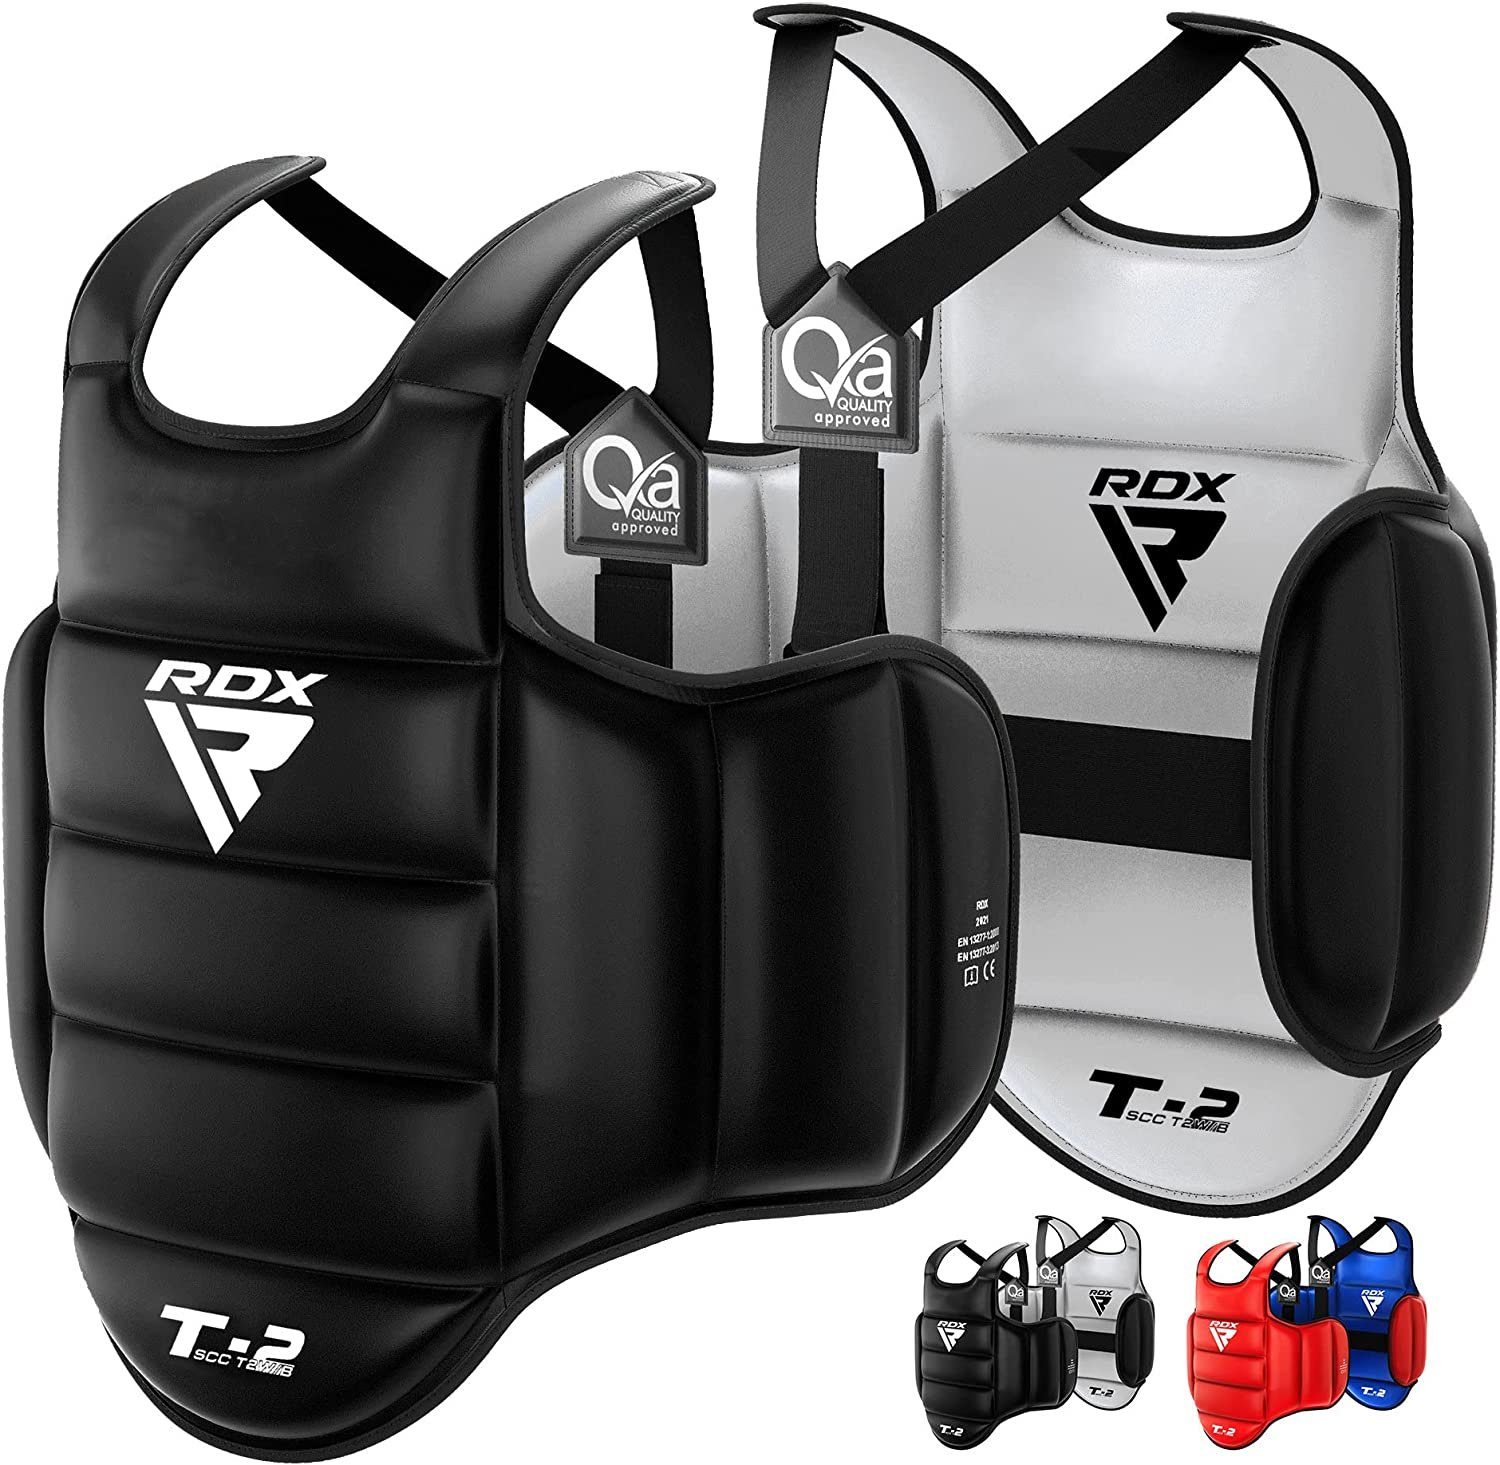 RDX Sports Brustschutz RDX Body Protector Martial Arts, Chest Protector Kickboxing White/Black